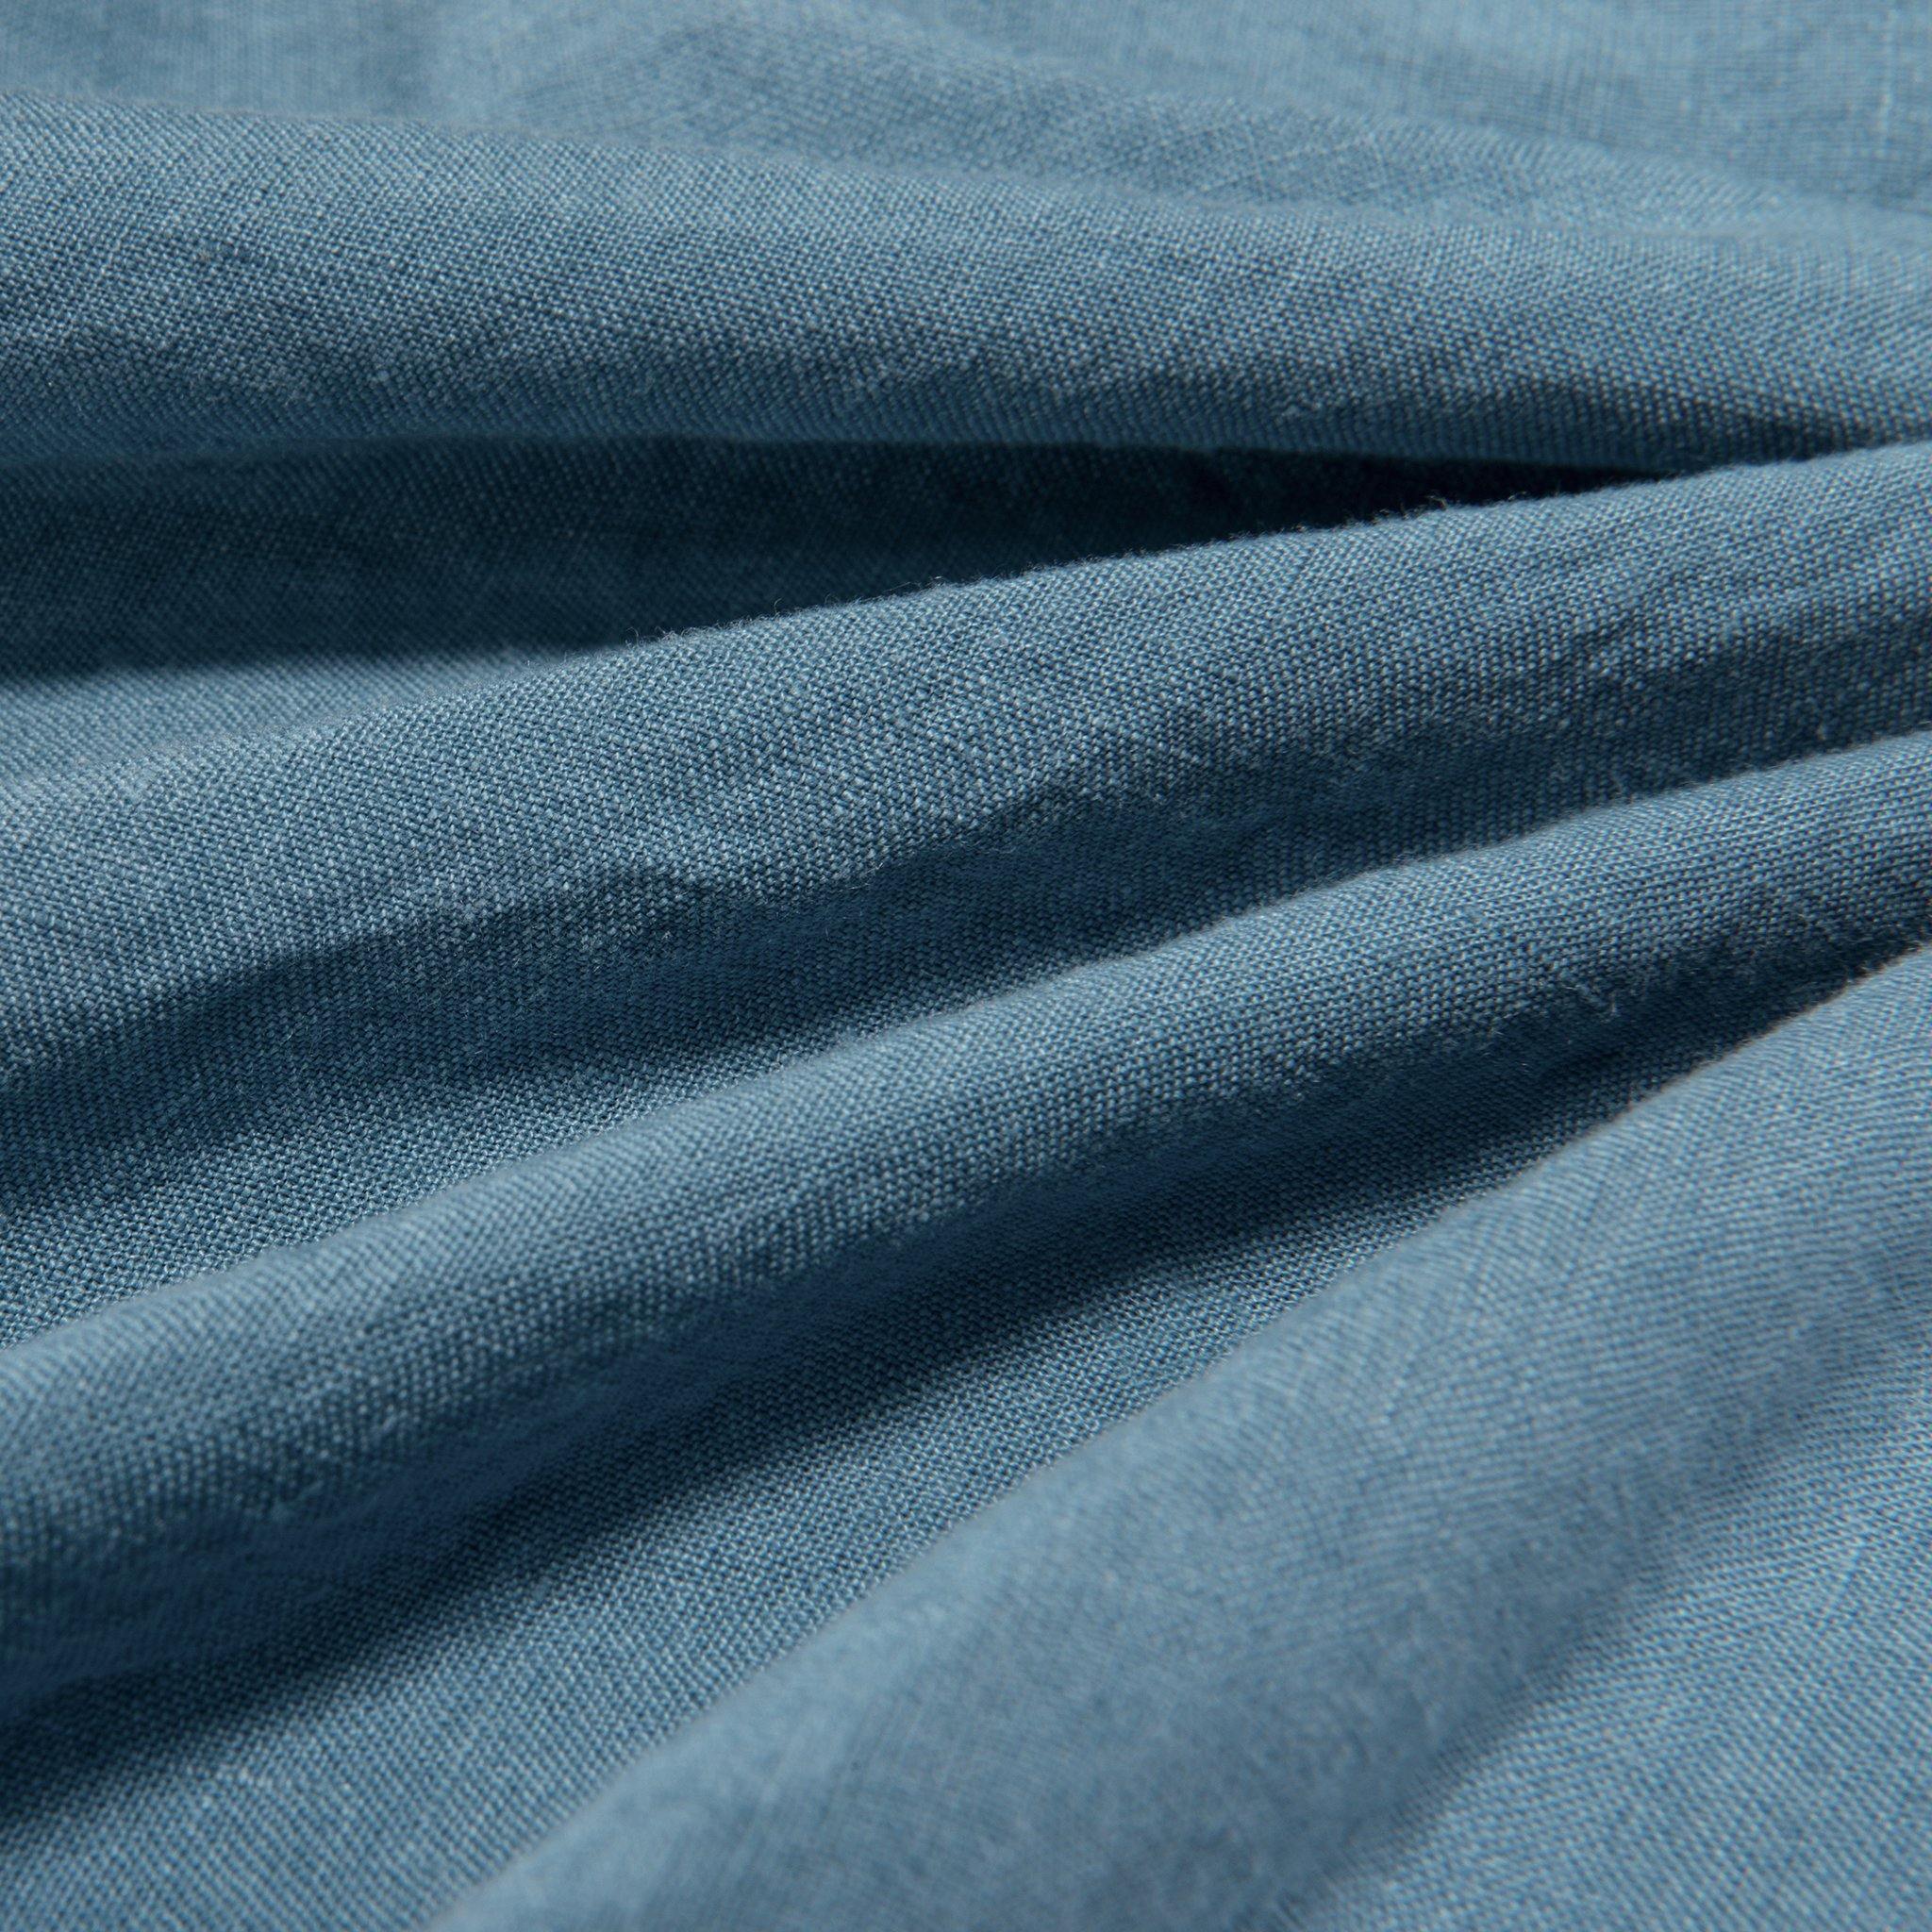 Buy 100% Natural Linen Flat Sheets Online – endlessbay